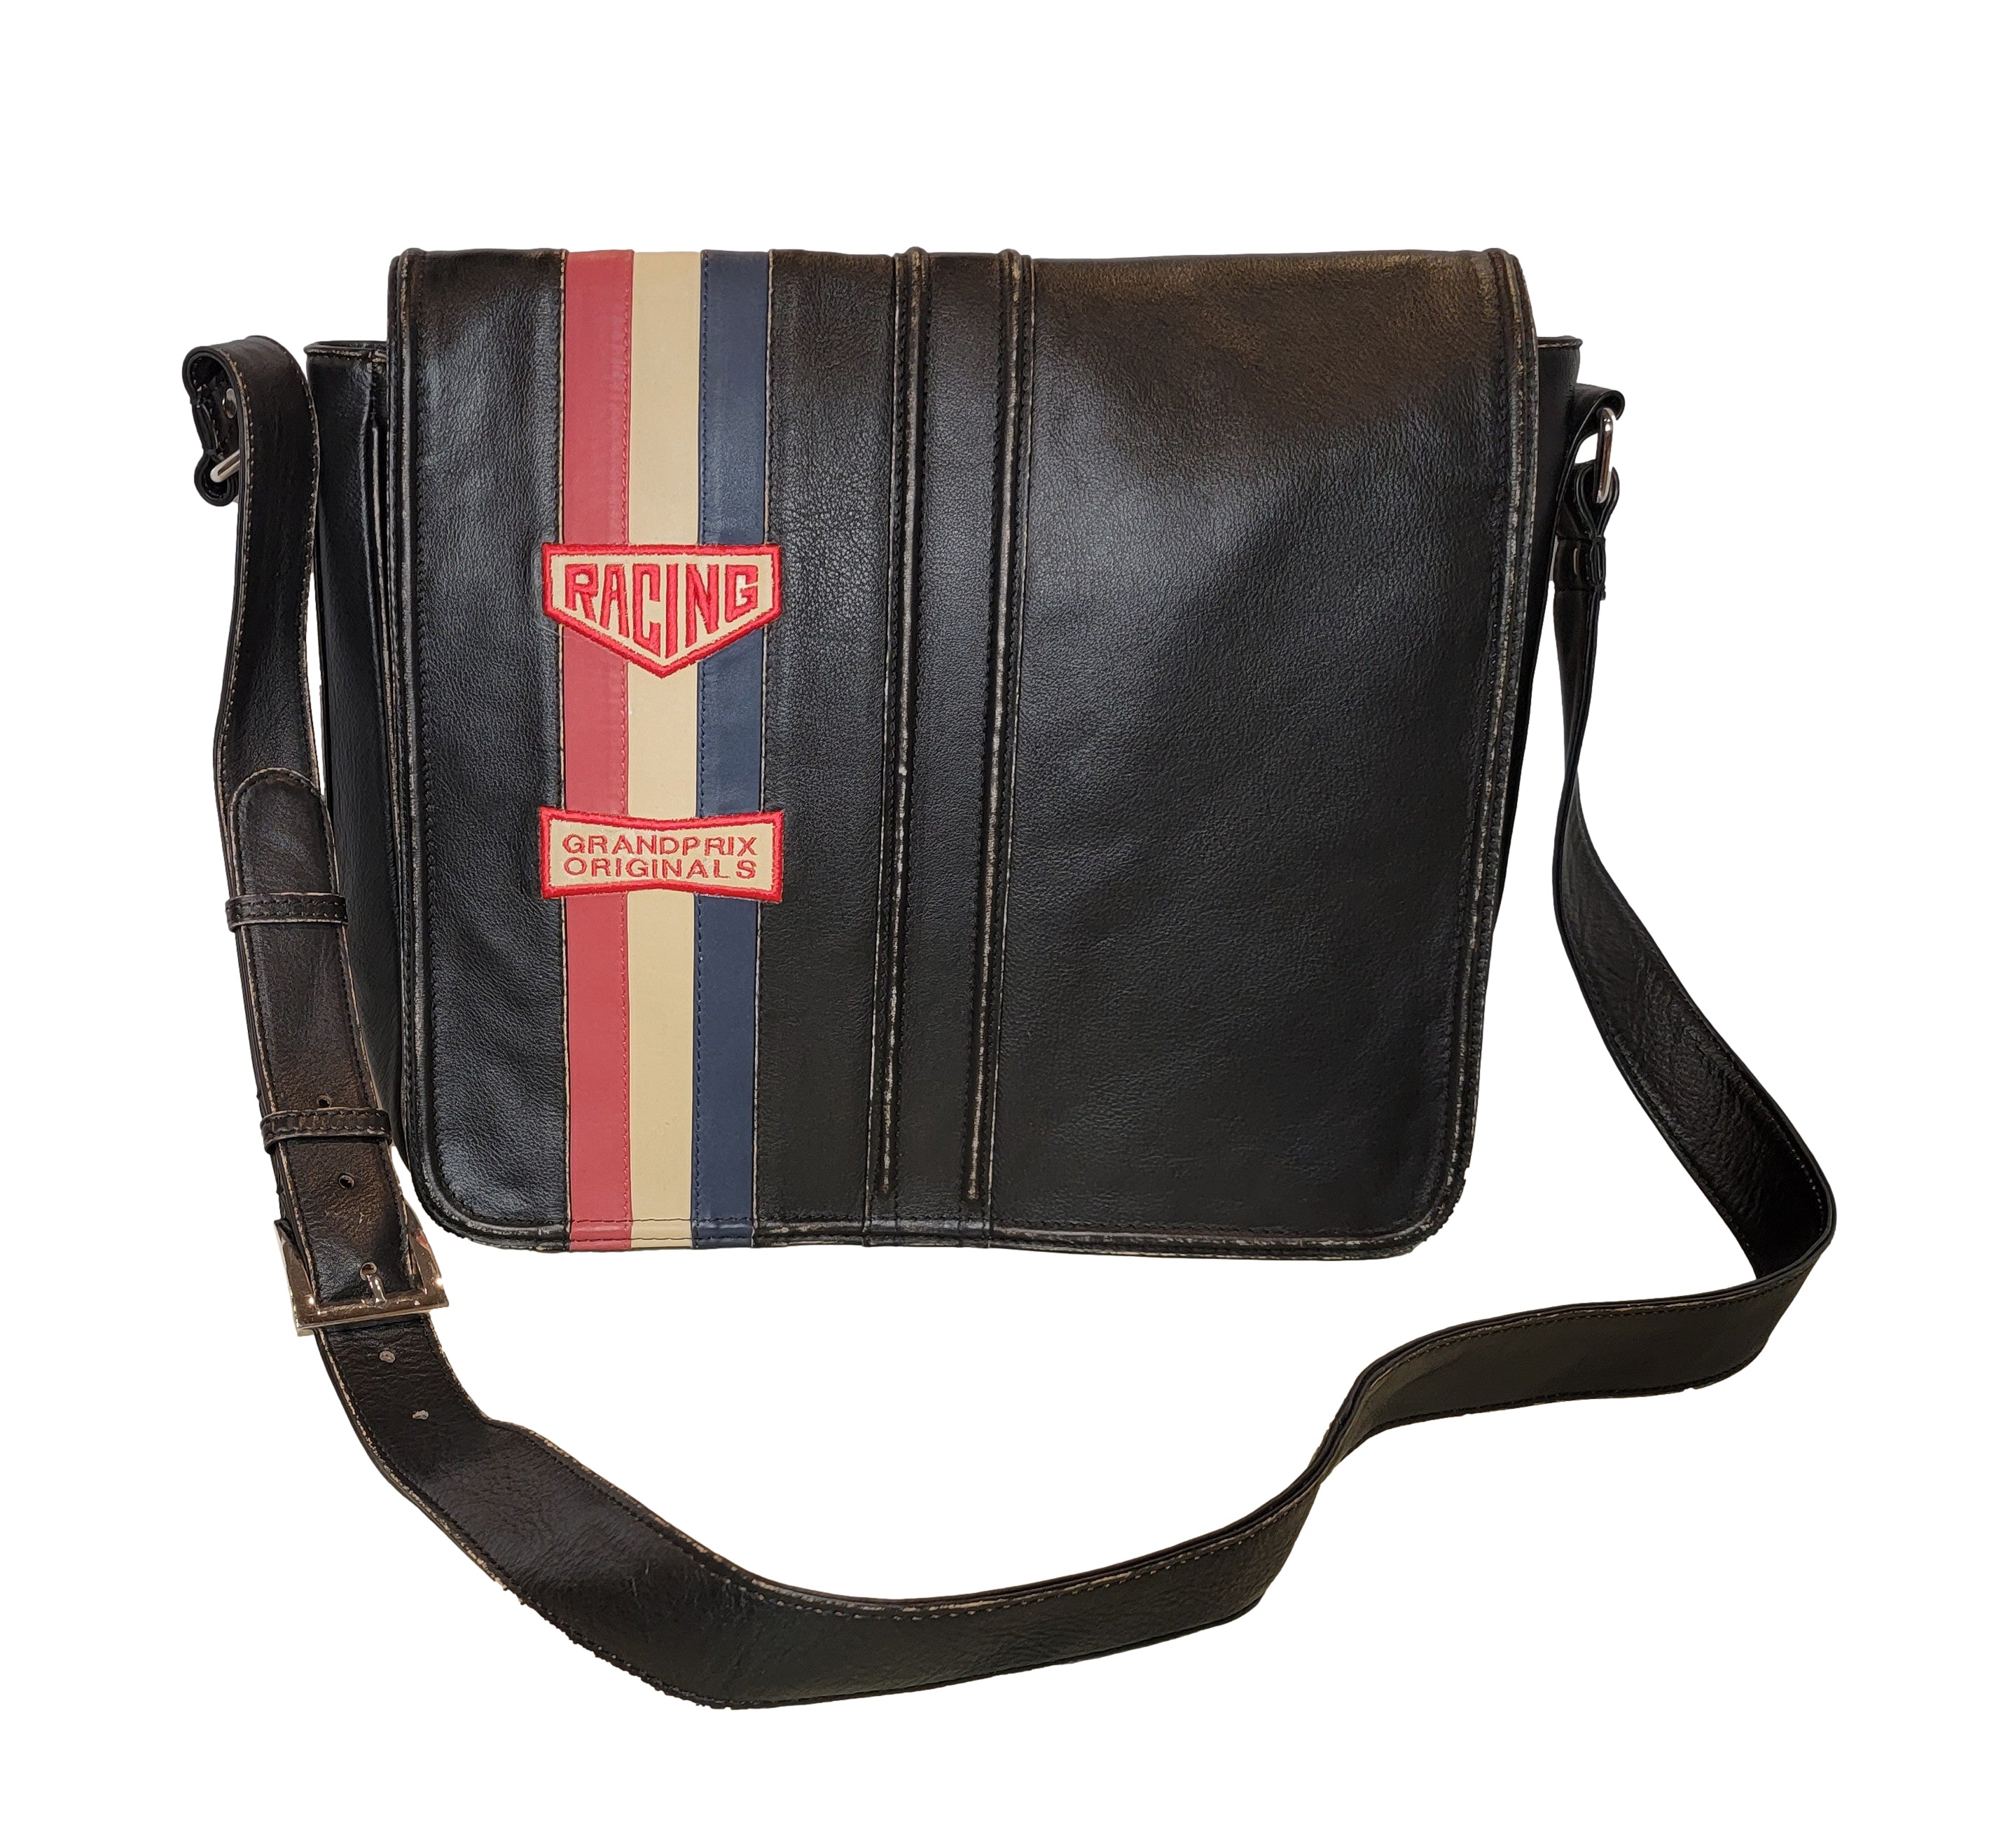 Luxurious Simple Design Flap Bag 100% Genuine Leather Women Shoulder  Crossbody Bag Blue Cowhide Leather Messenger Bag Small